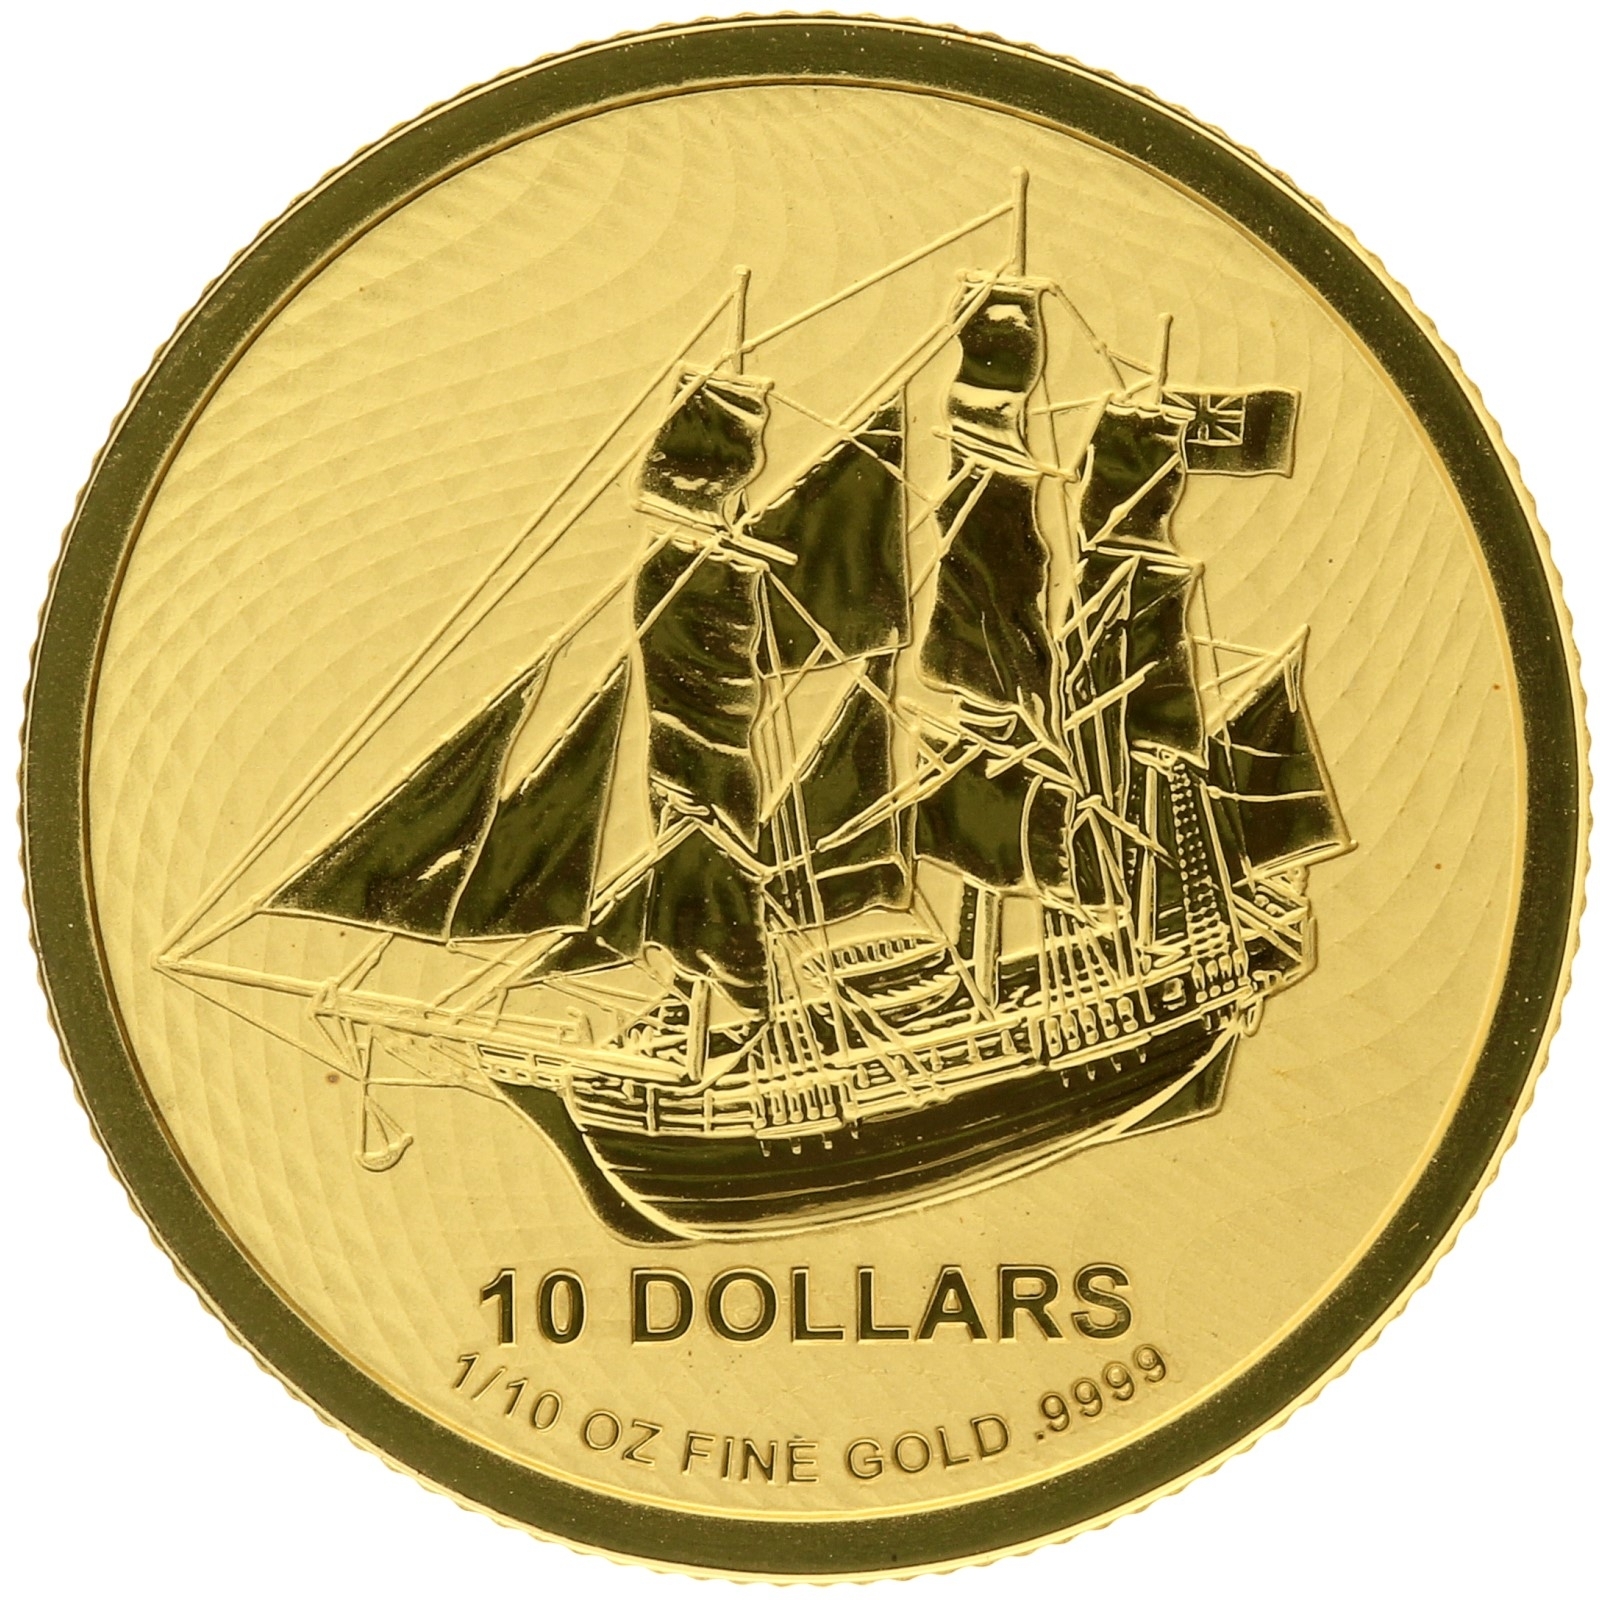 Cook Islands - 10 Dollars - 2020 - HMS Bounty - 1/10oz